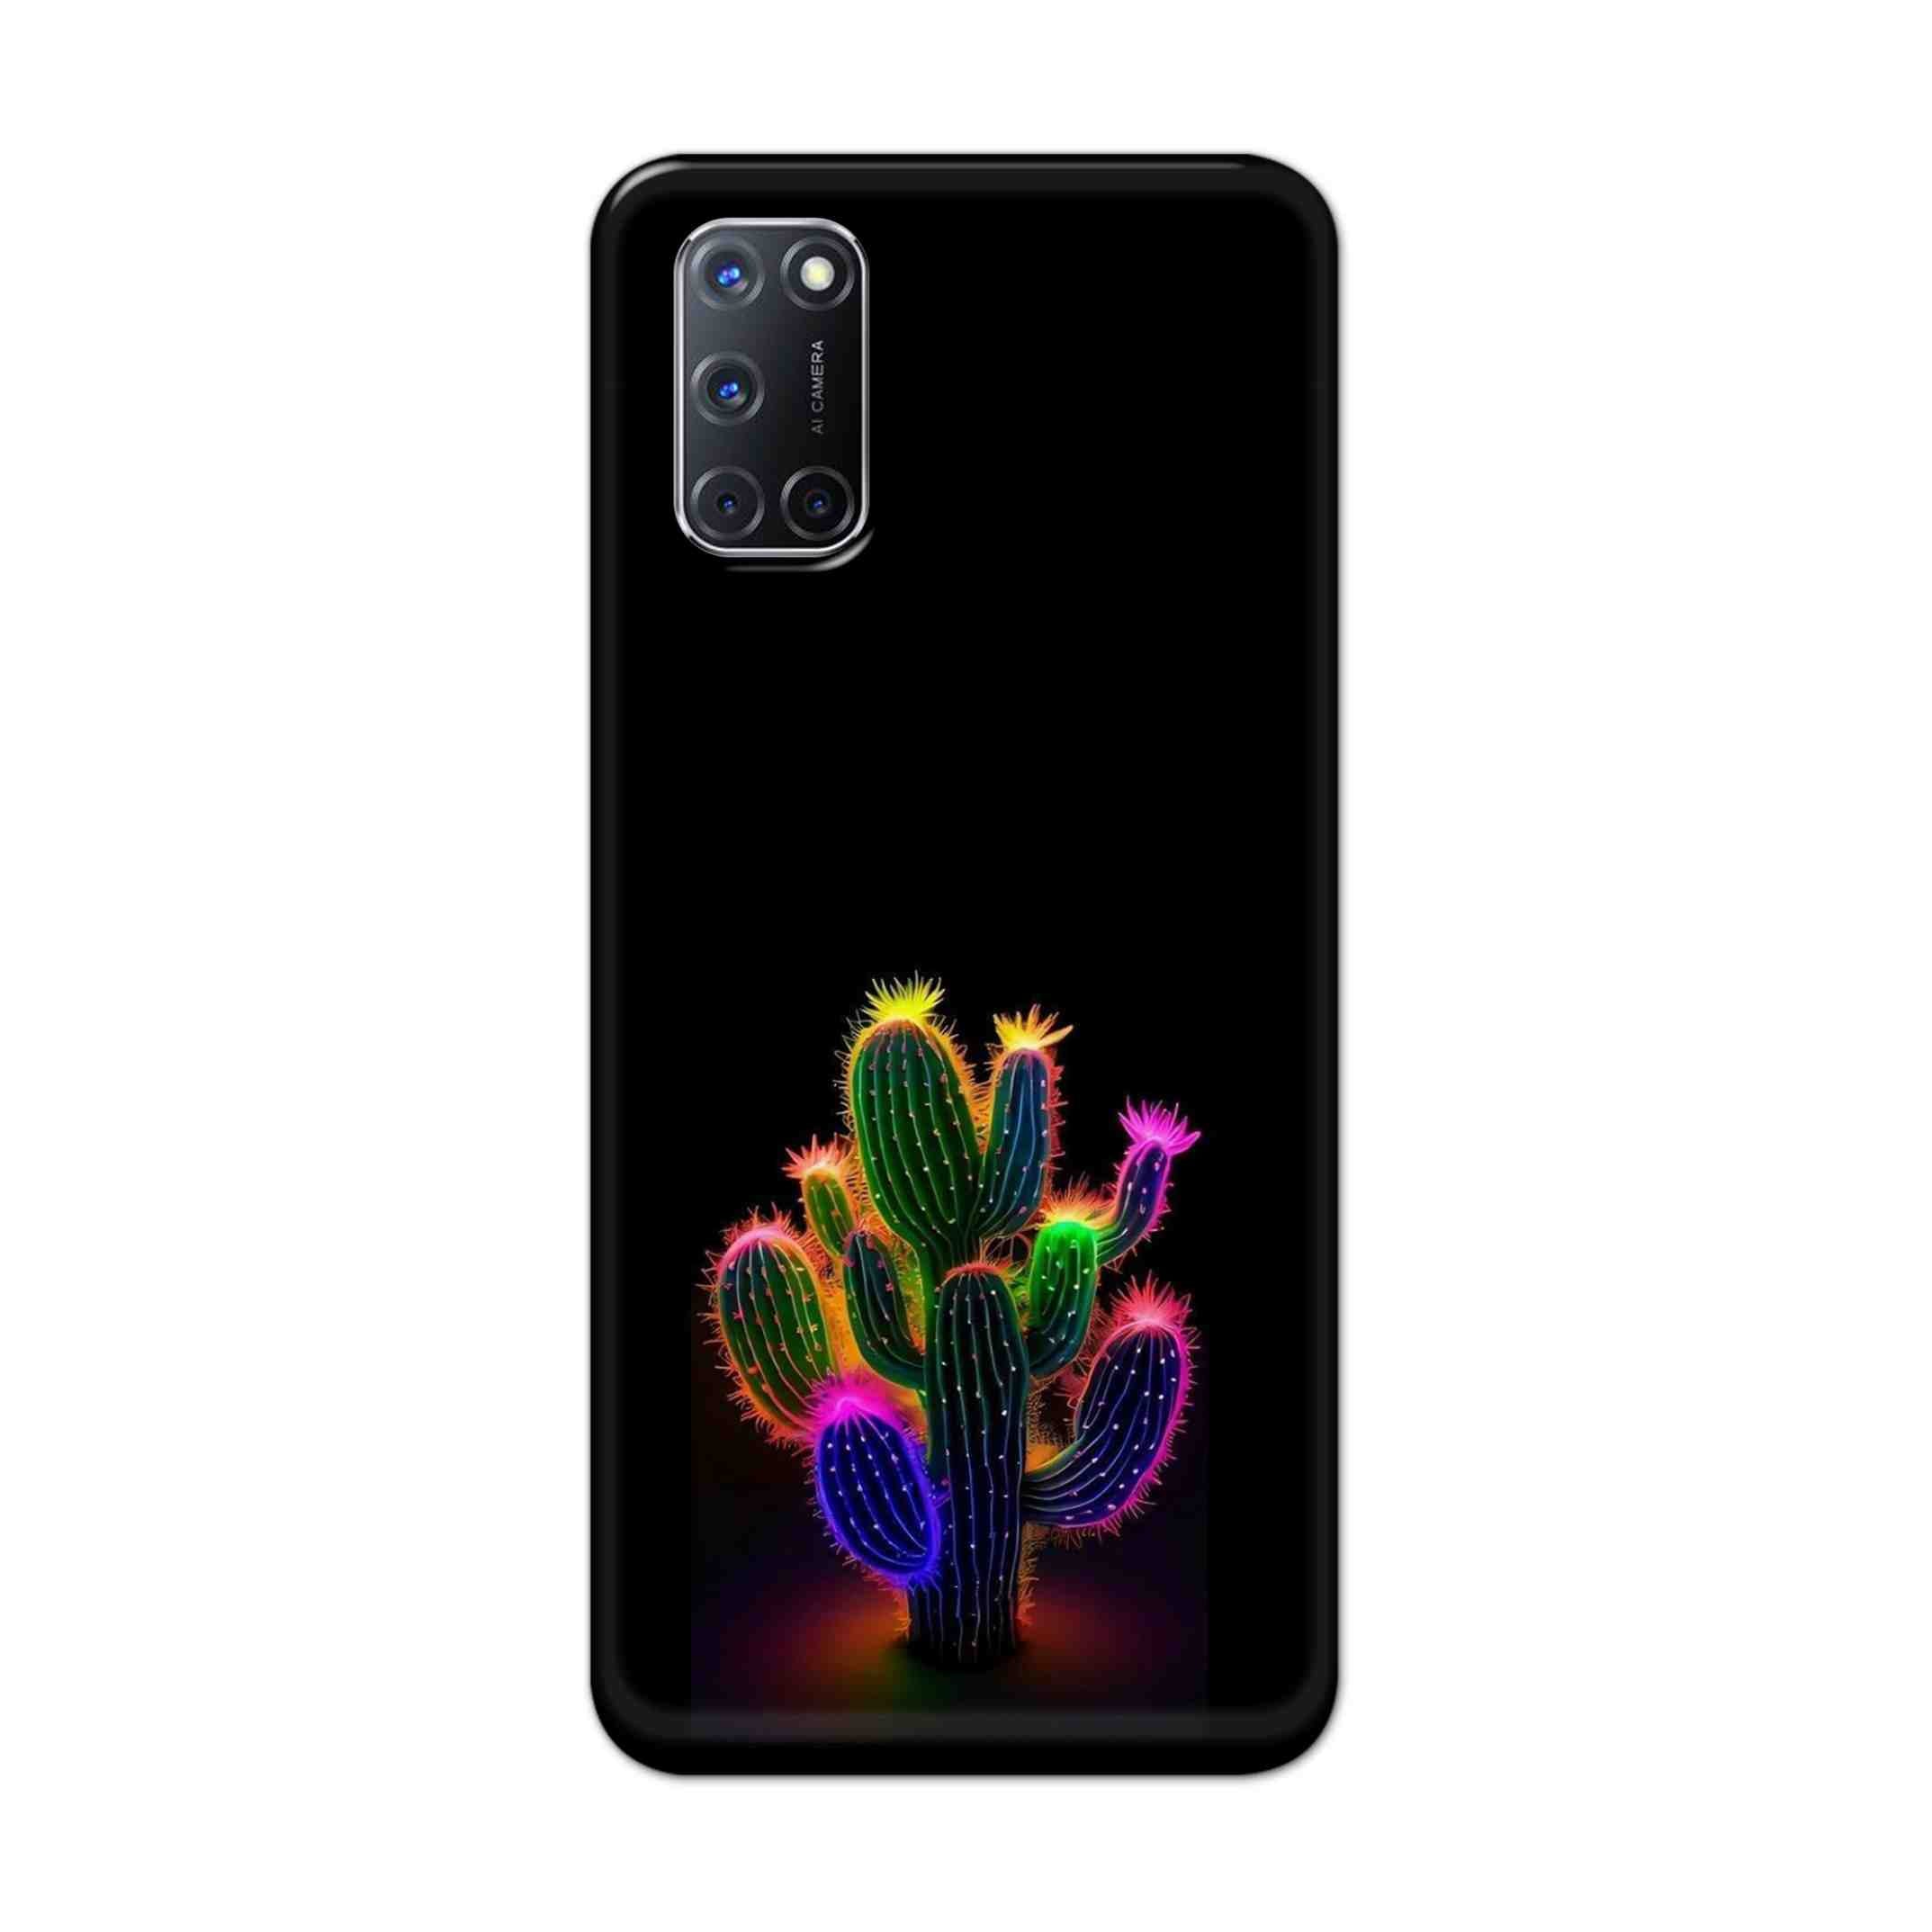 Buy Neon Flower Hard Back Mobile Phone Case Cover For Oppo A52 Online